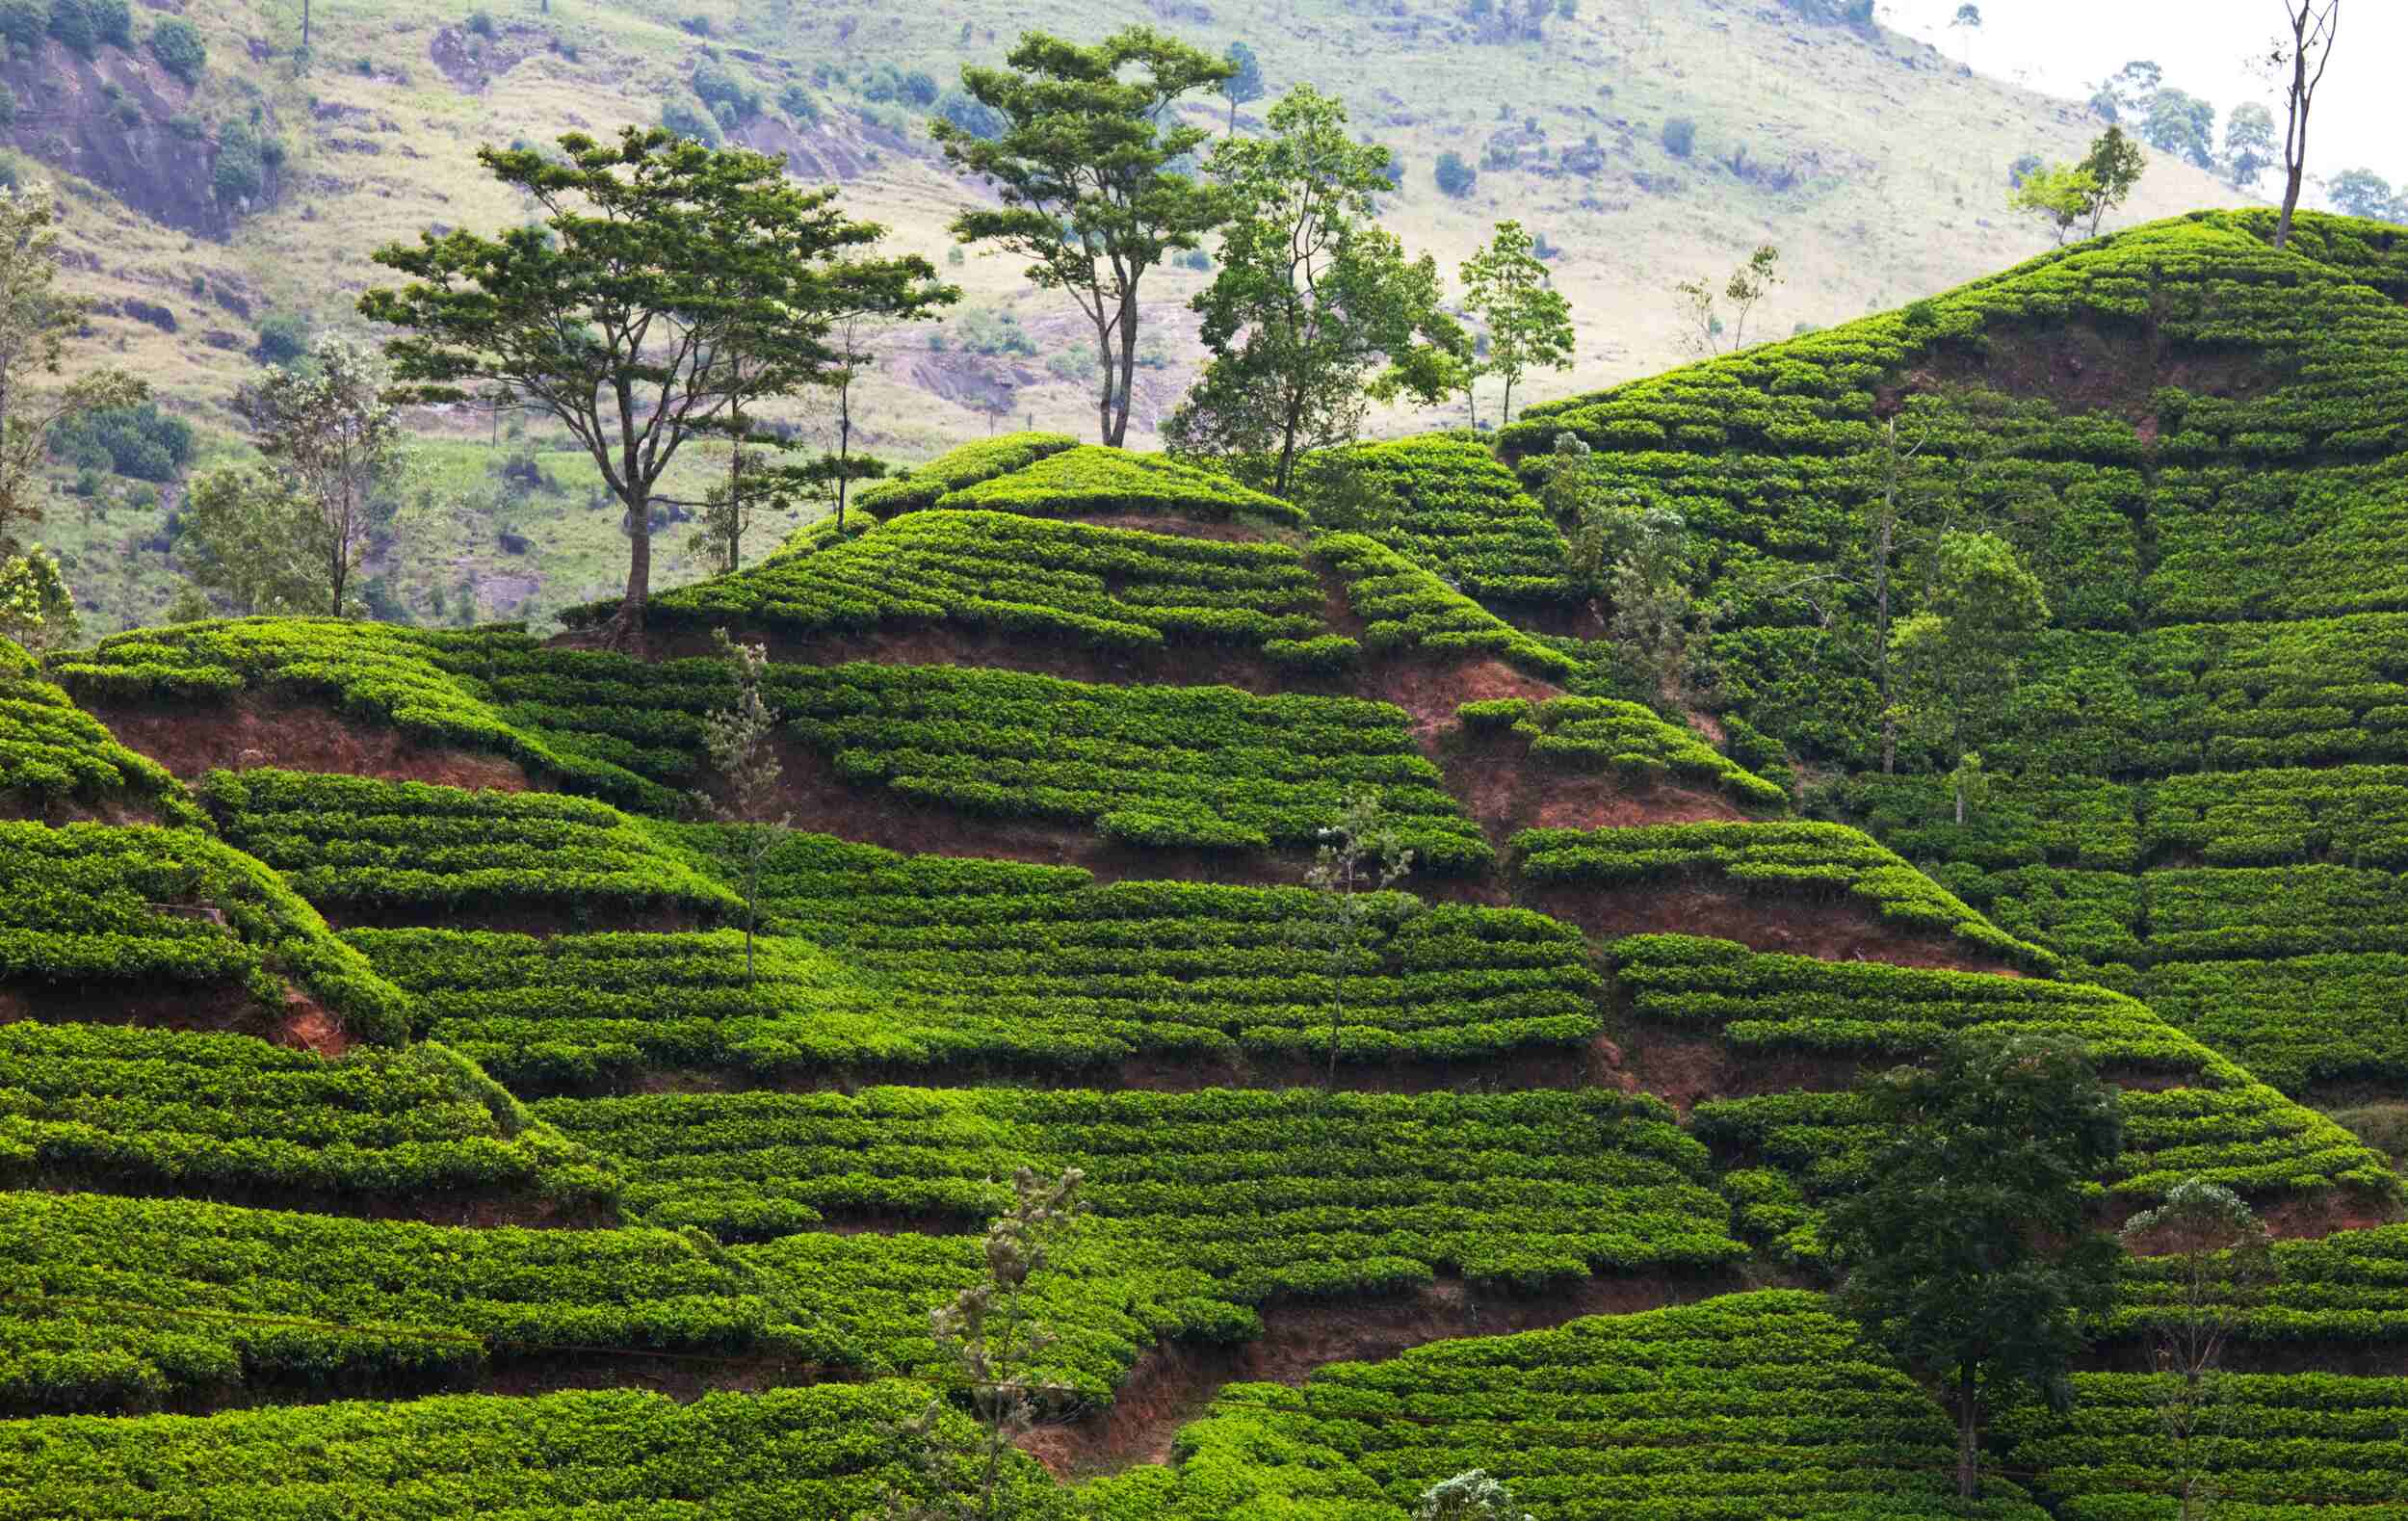 visit-tea-plantations-in-sri-lanka-exploring-tea-country